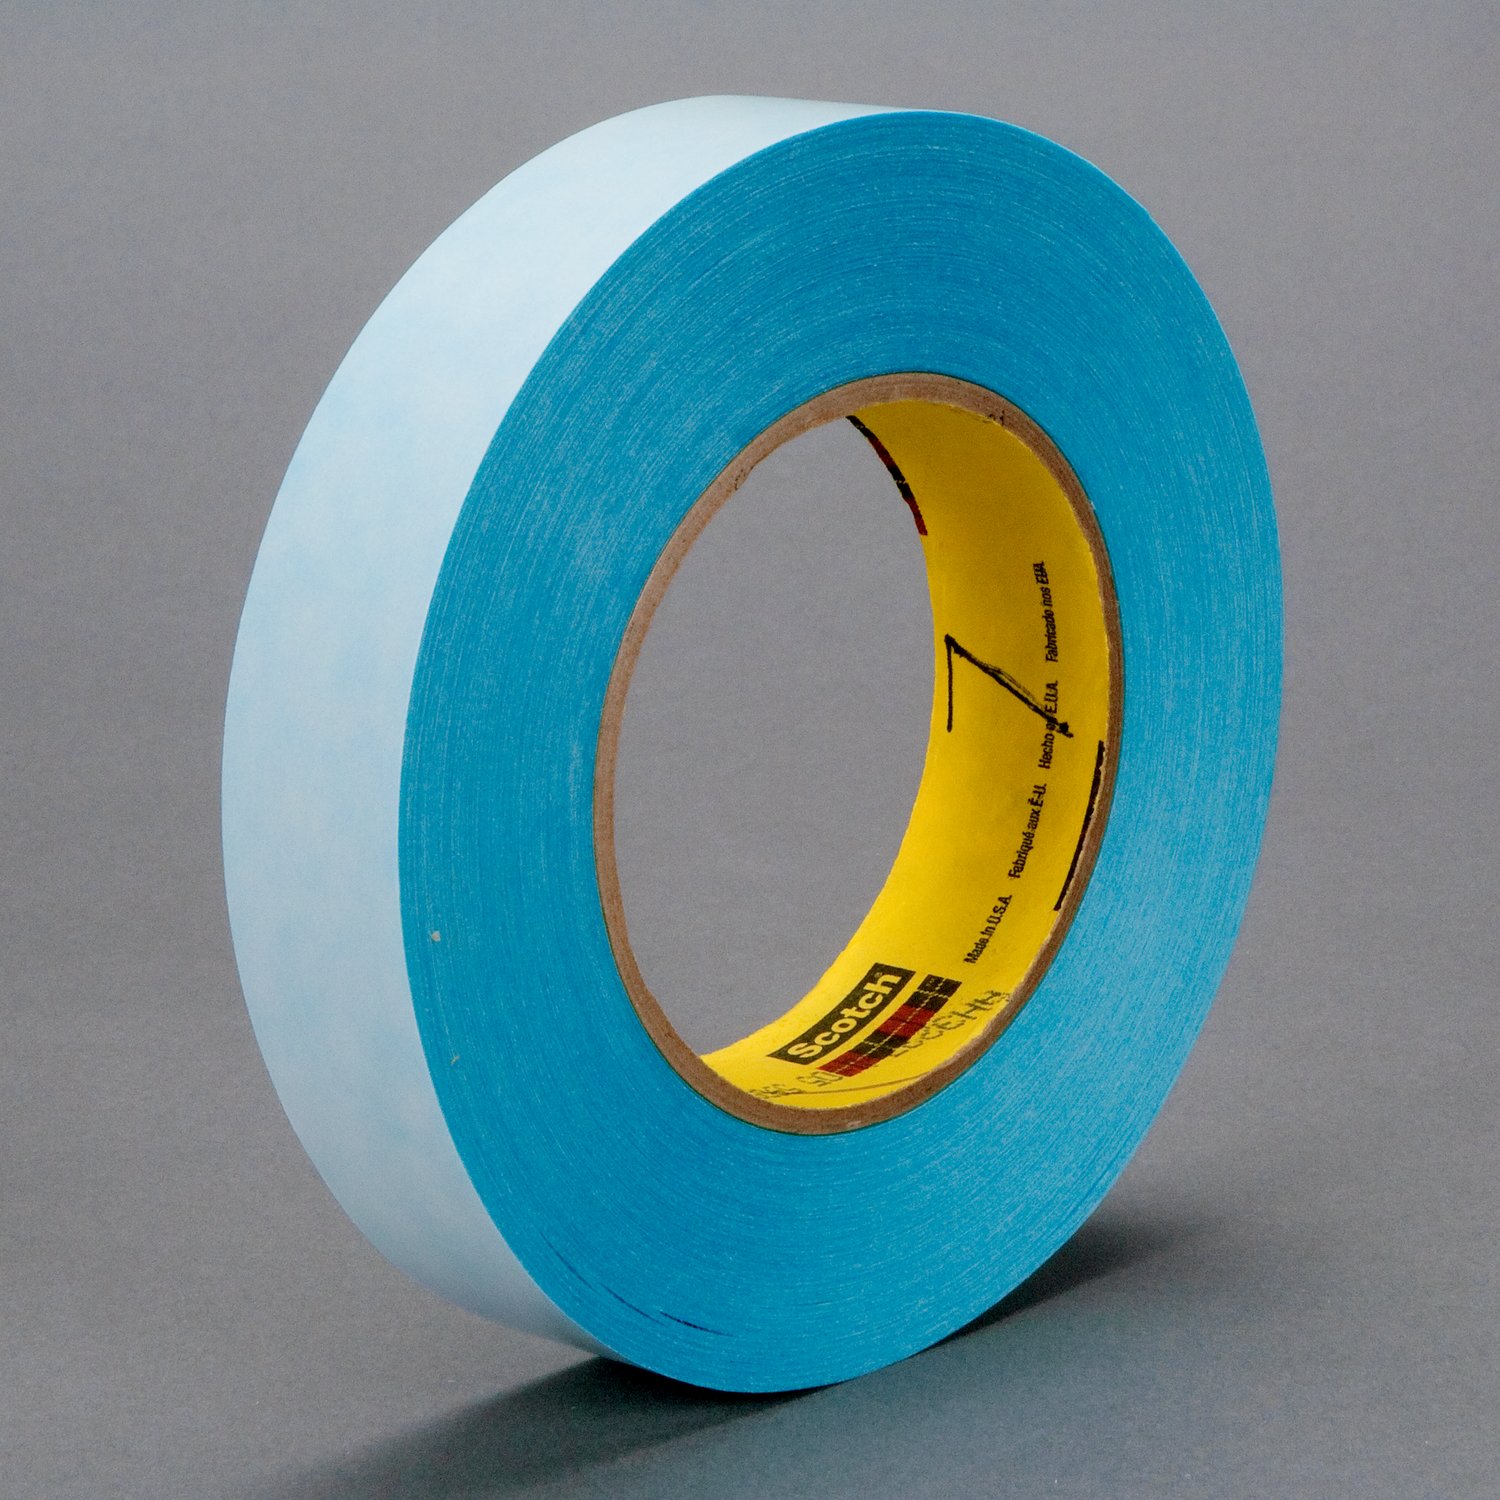 7100028055 - 3M Repulpable Double Coated Tape R3227, Blue, 24 mm x 55 m, 3.5 mil, 36
rolls per case